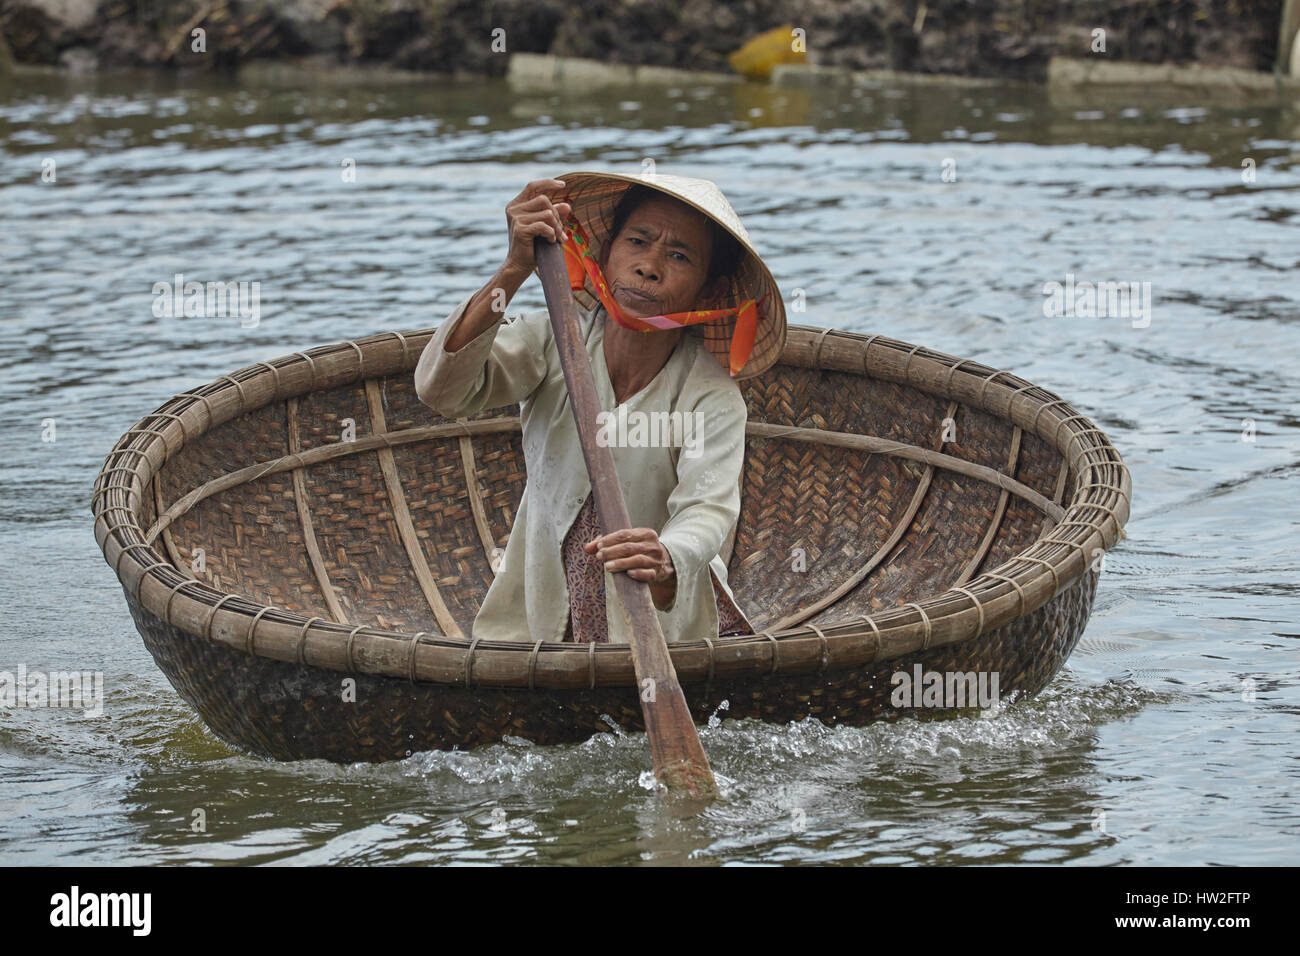 Elderly woman in basket boat, Cam Kim Island, Hoi An, Vietnam Stock Photo -  Alamy